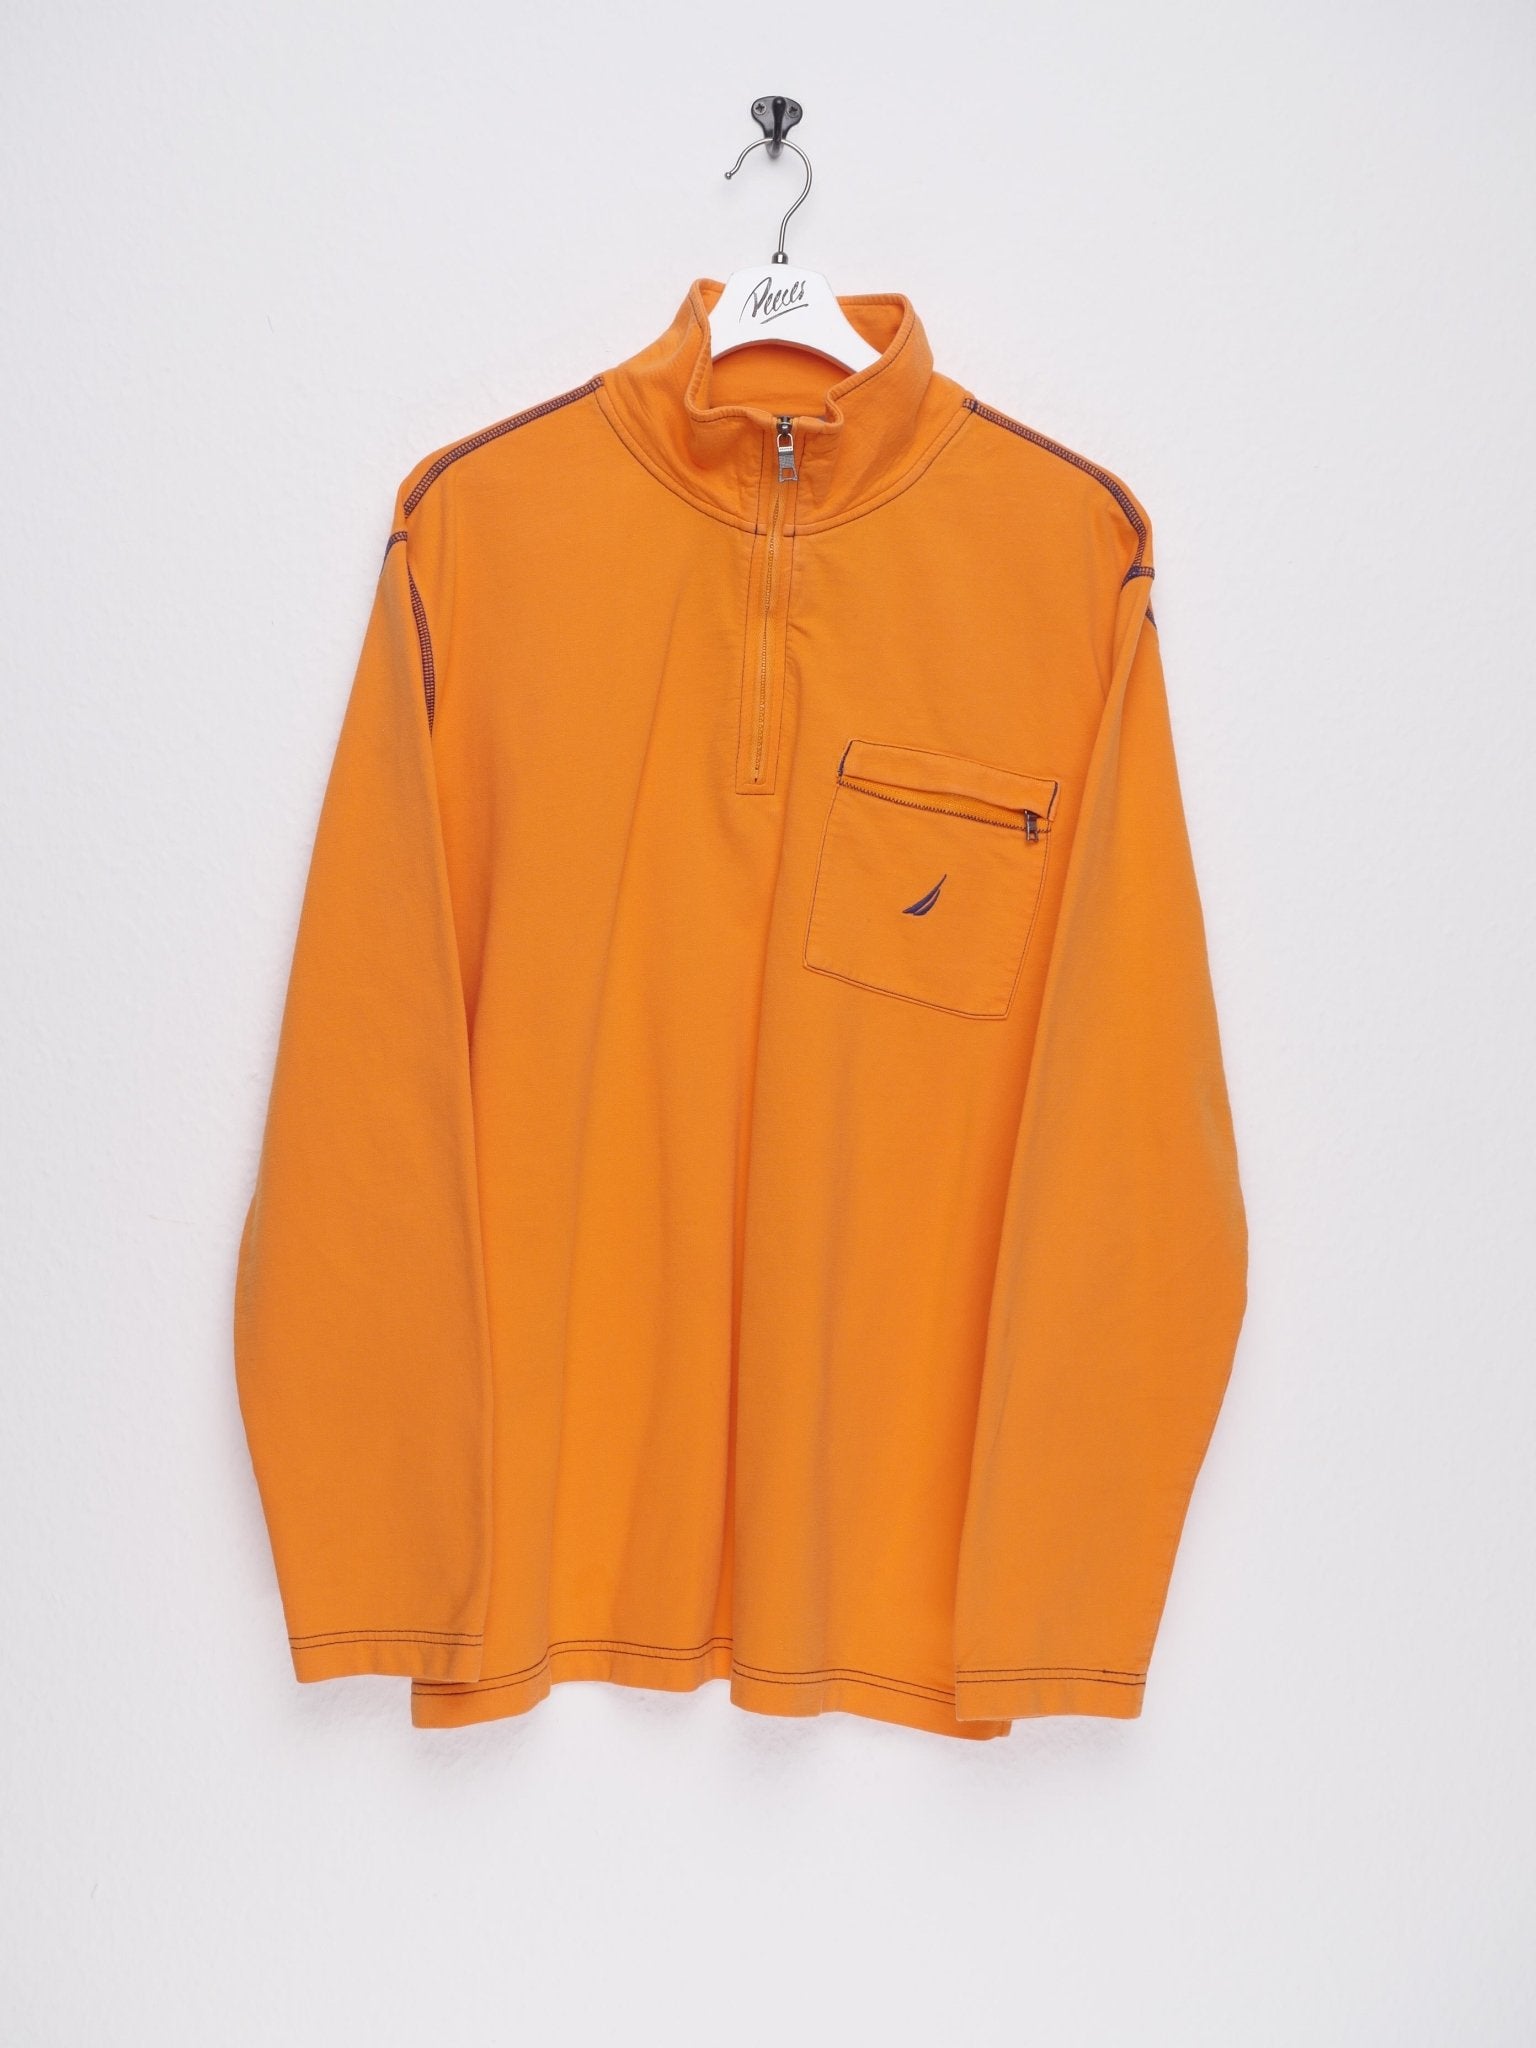 nautica embroidered Logo orange Half Zip Sweater - Peeces